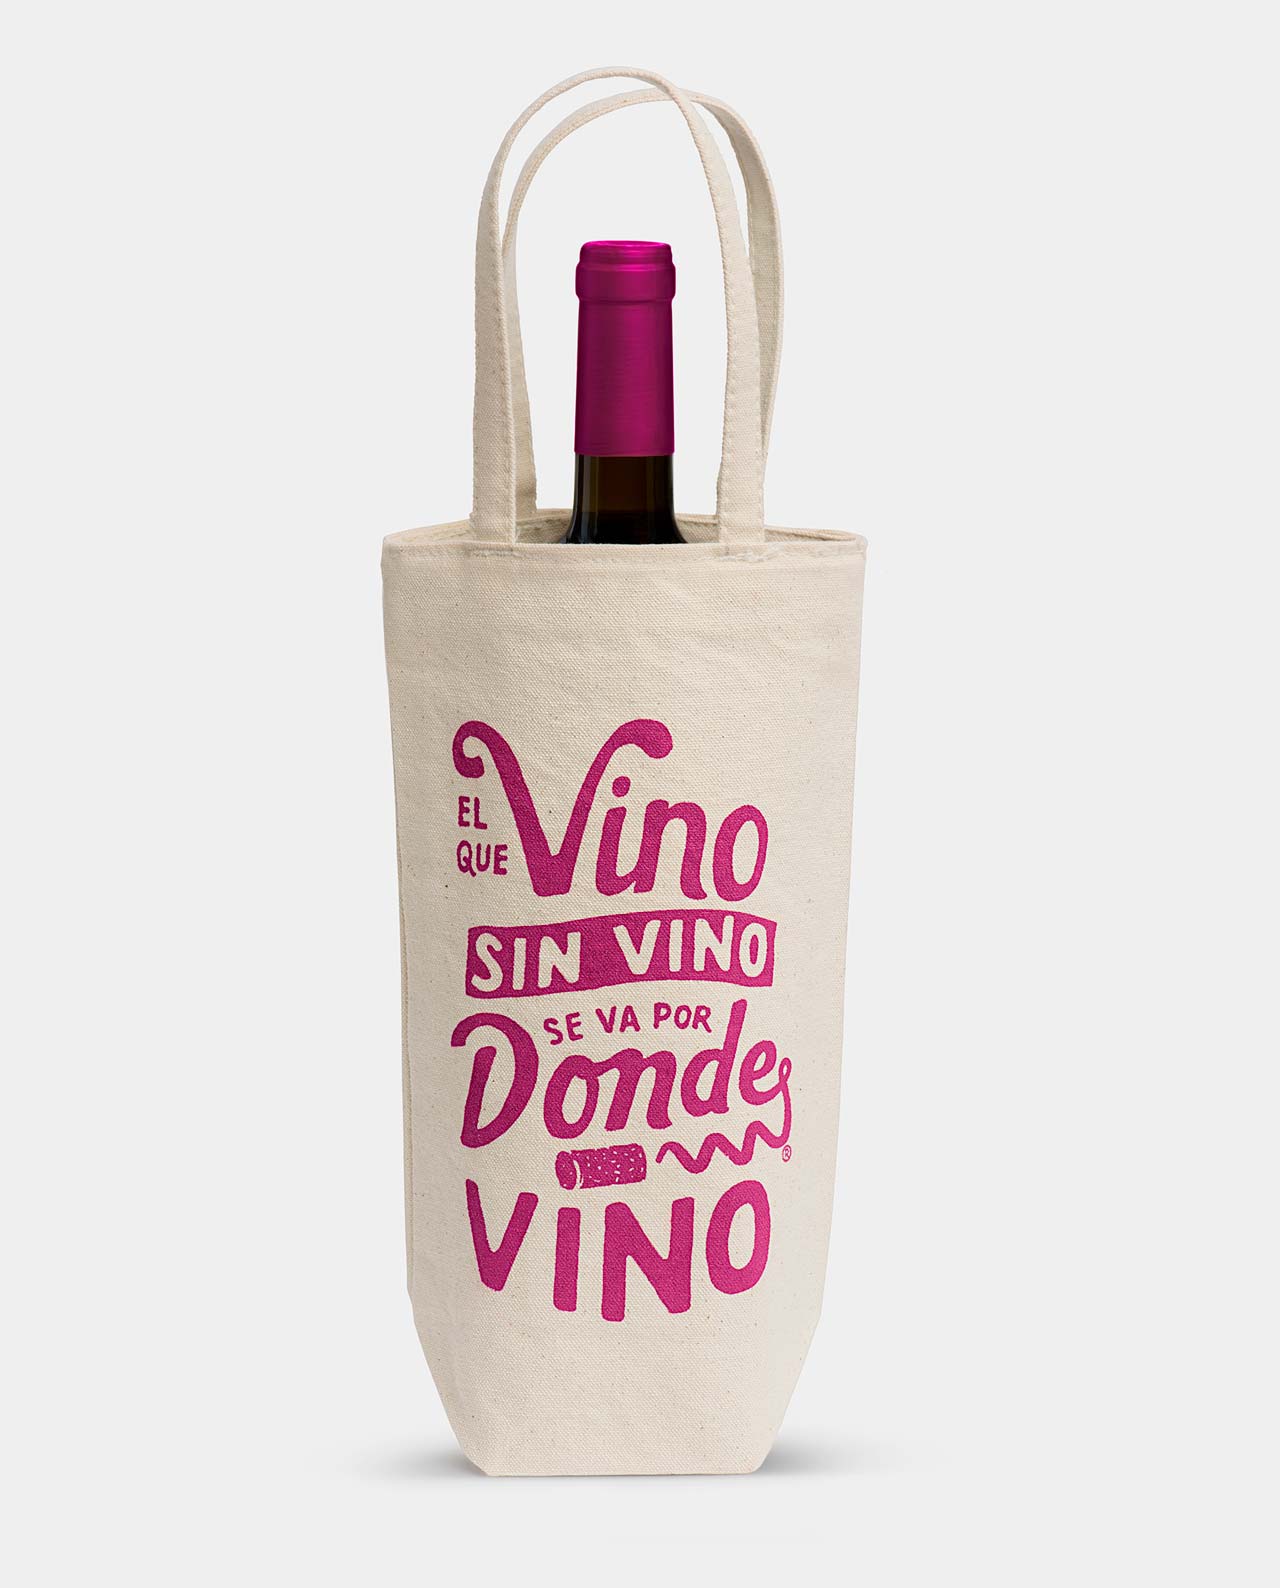 La bolsa ideal para regalar vino.El que Vino sin Vino se va por